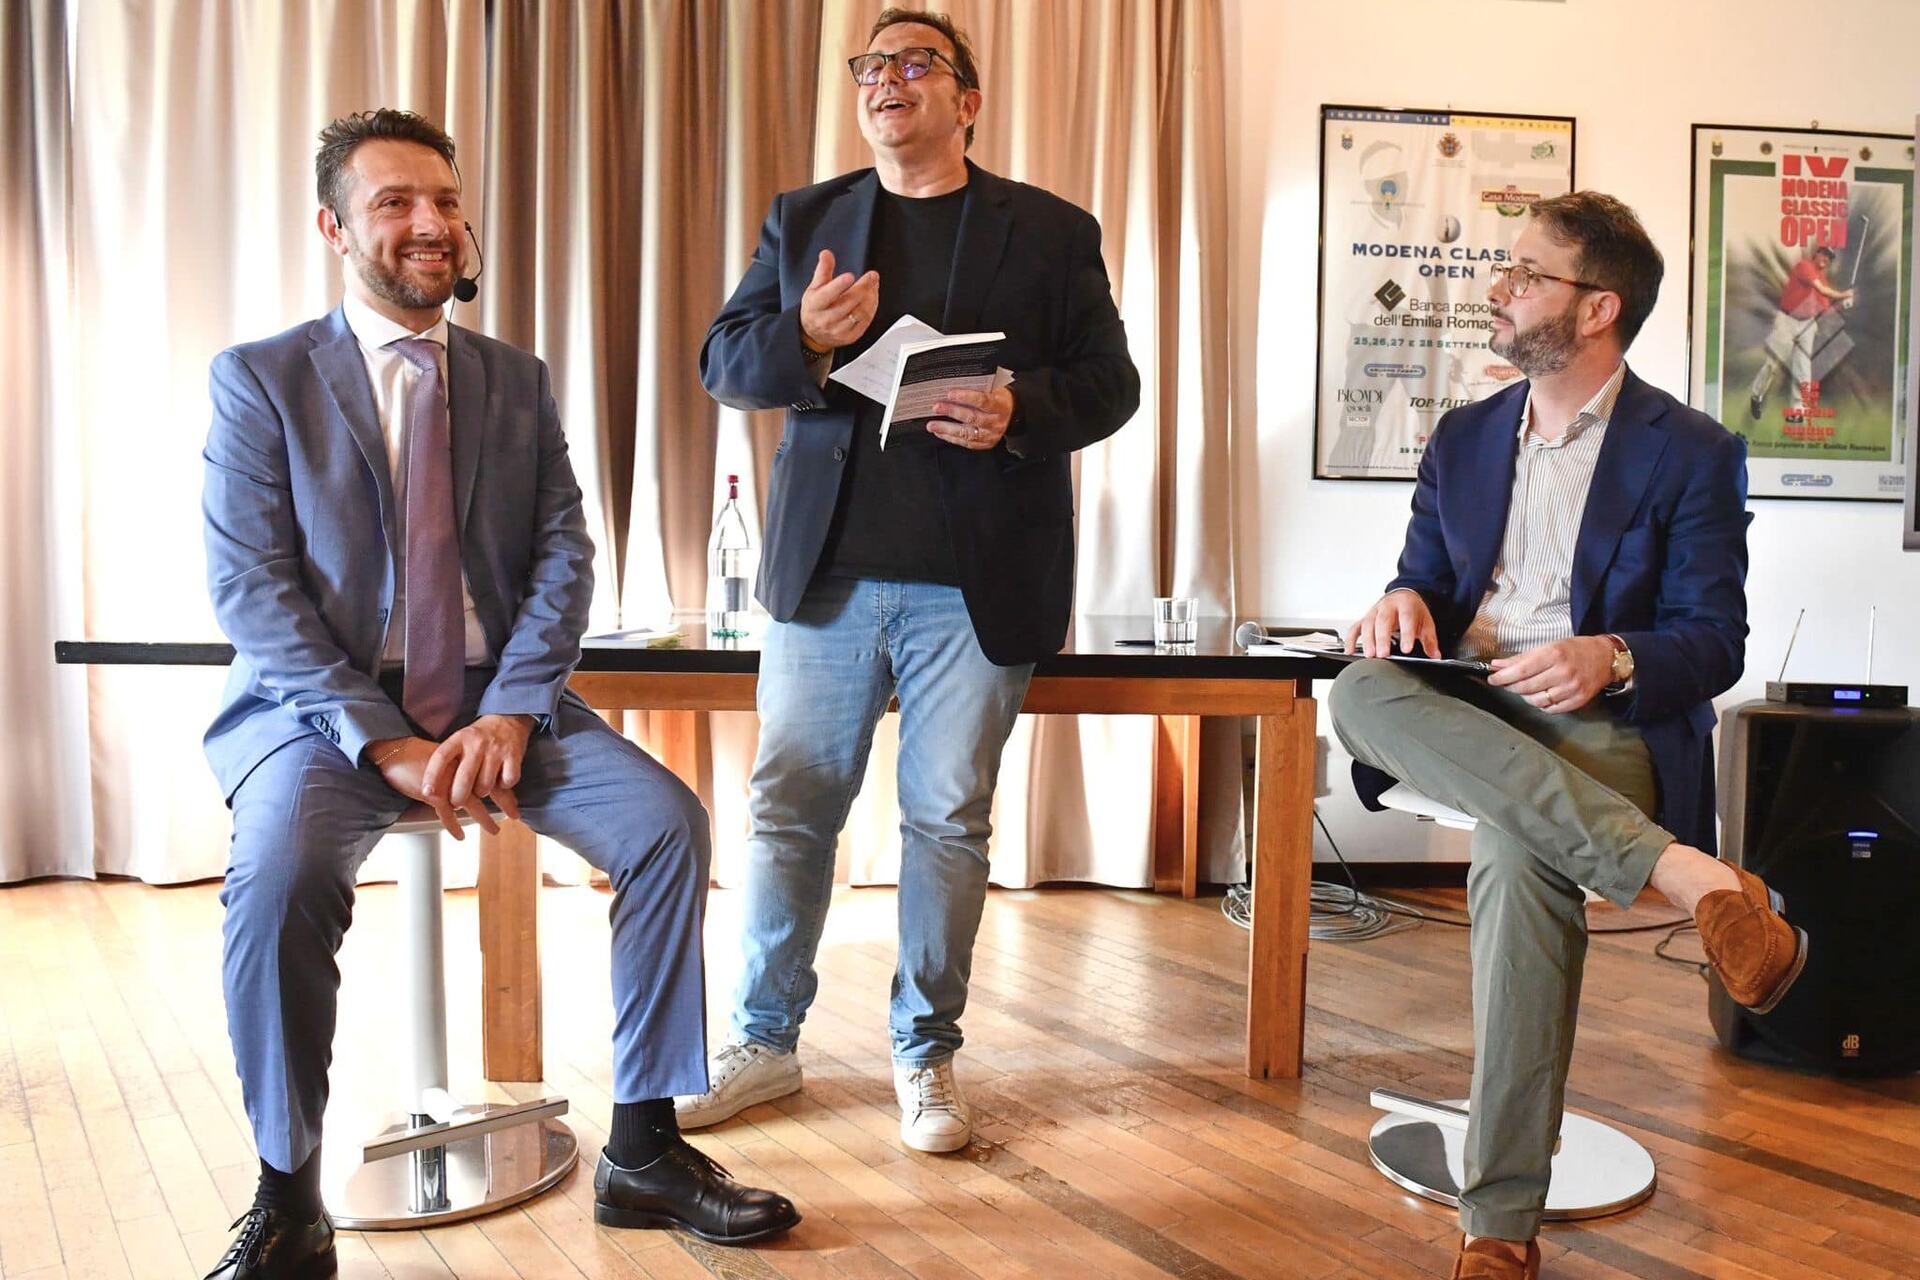 Paolo Lutti next to Marcello Marchesini and Gian Paolo Maini